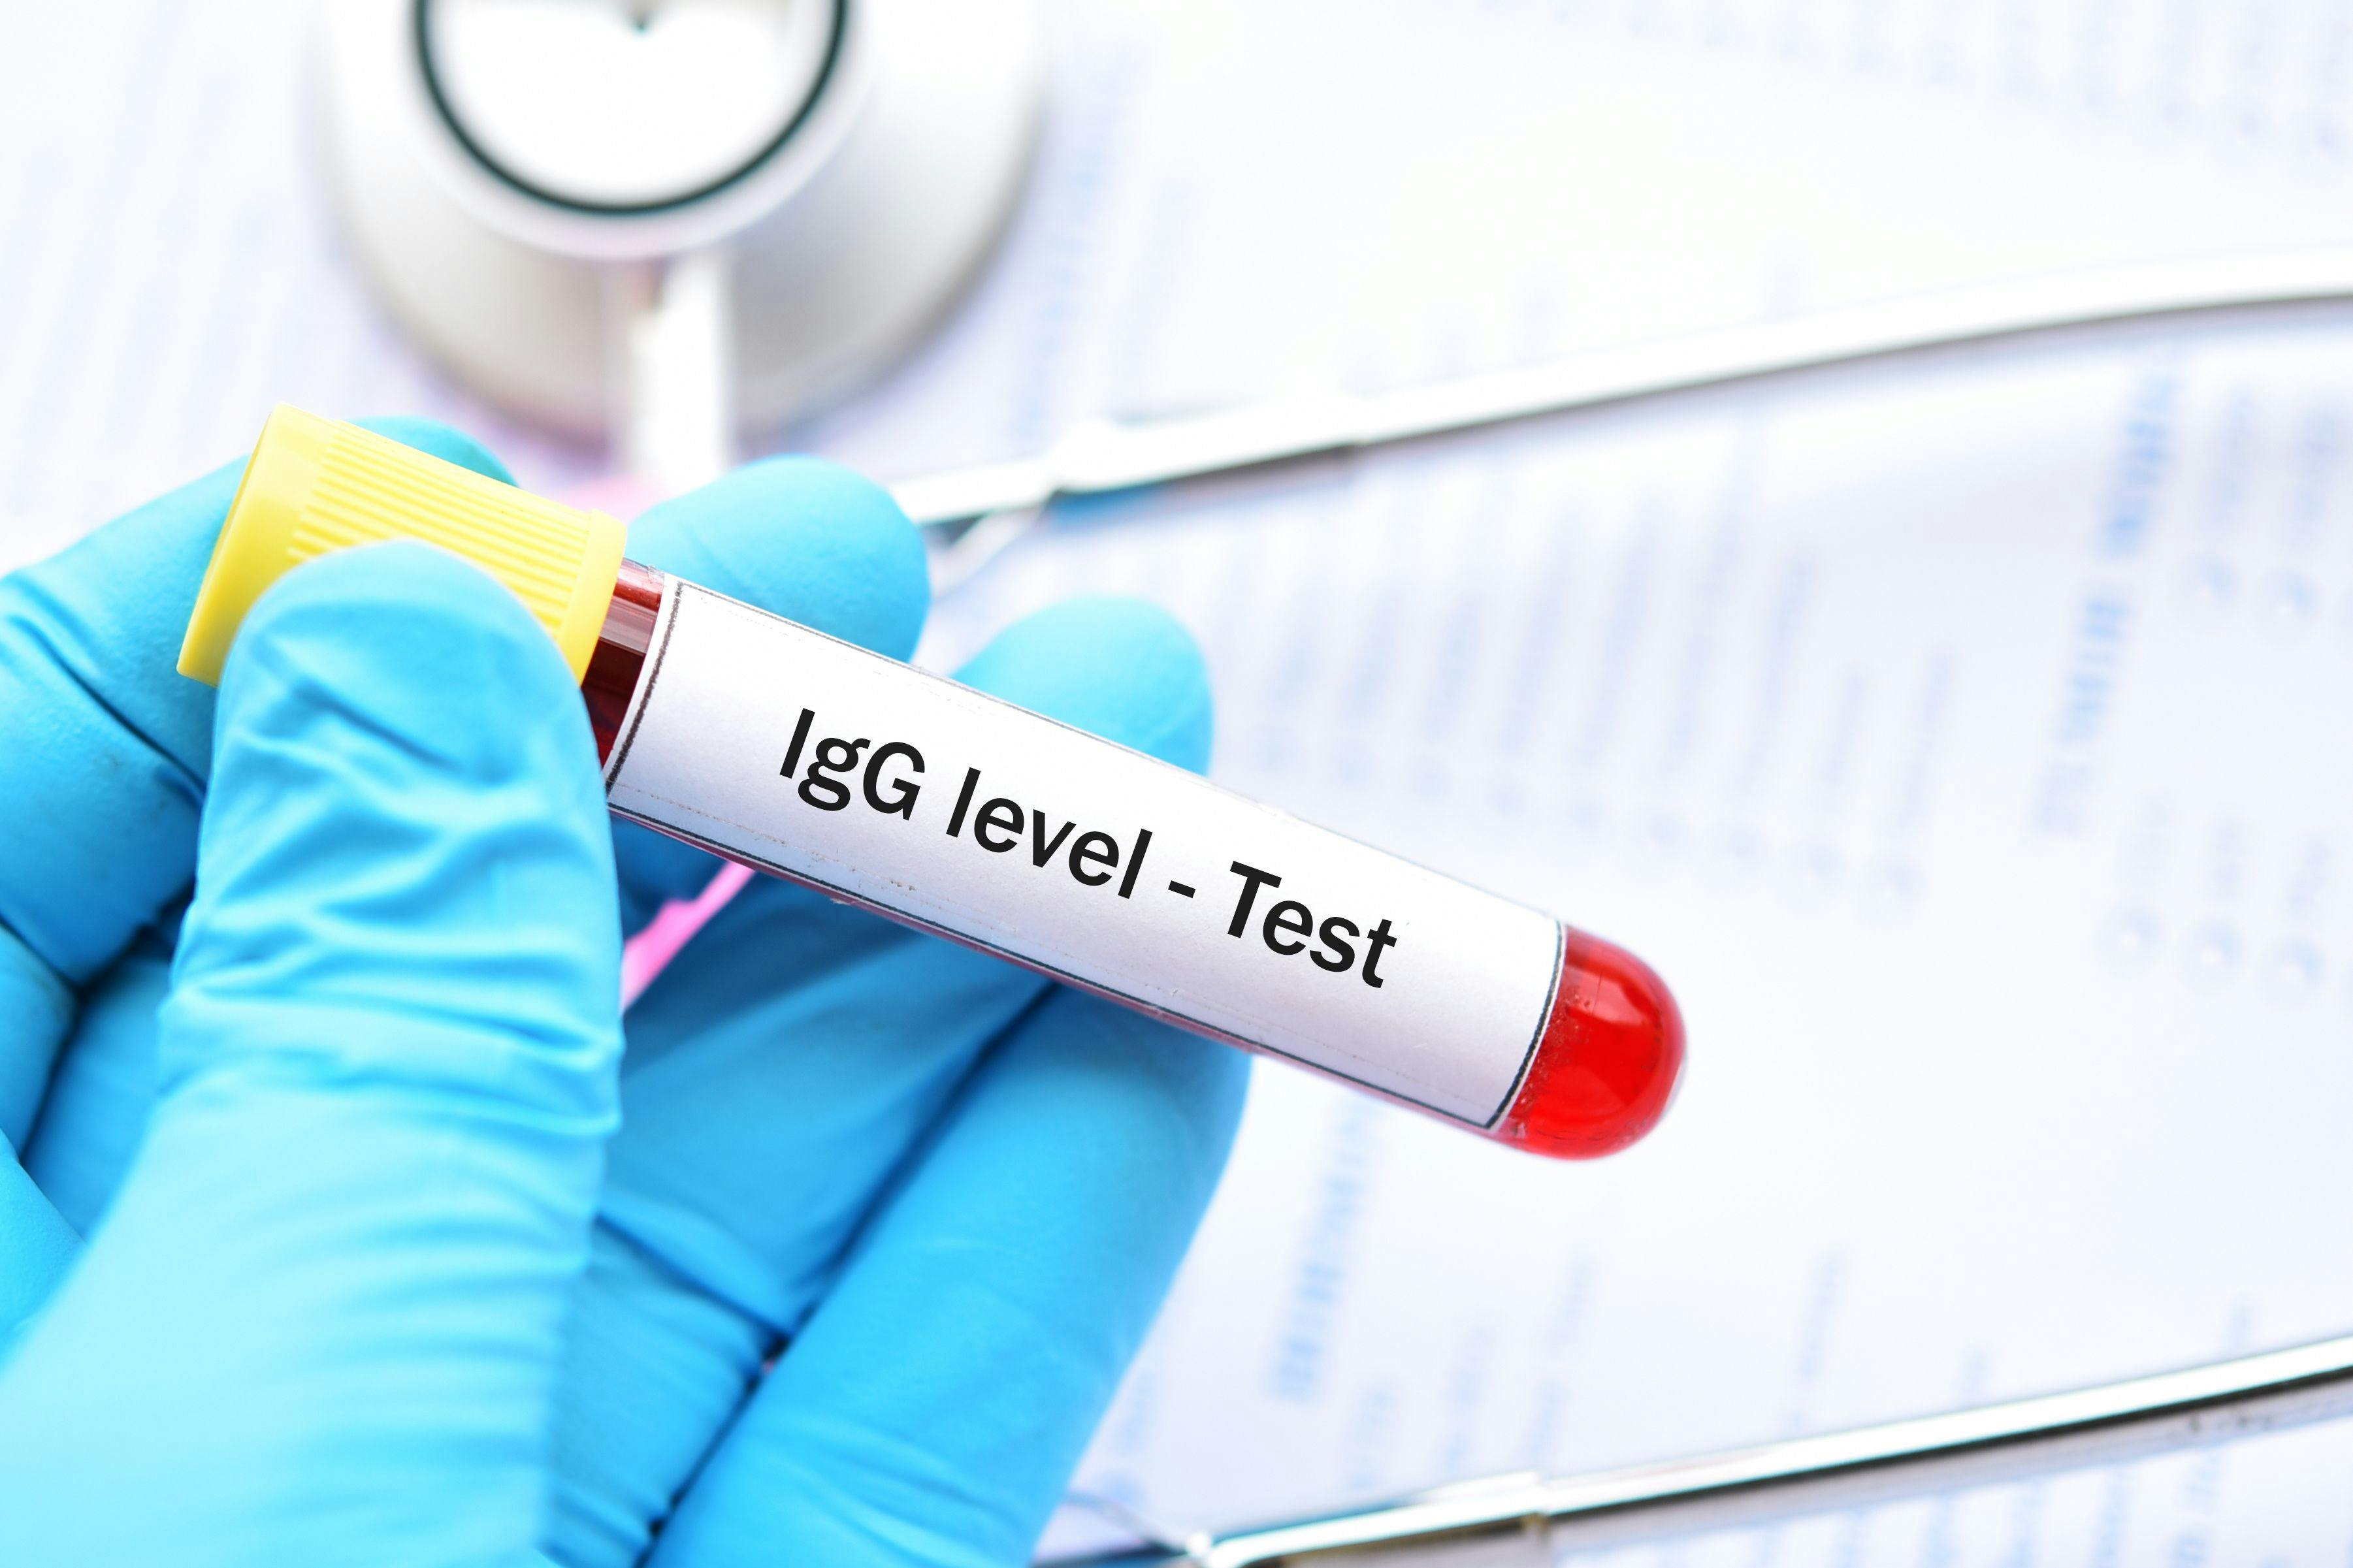 Immunoglobulin G test -- Image credit: jarun011 | stock.adobe.com